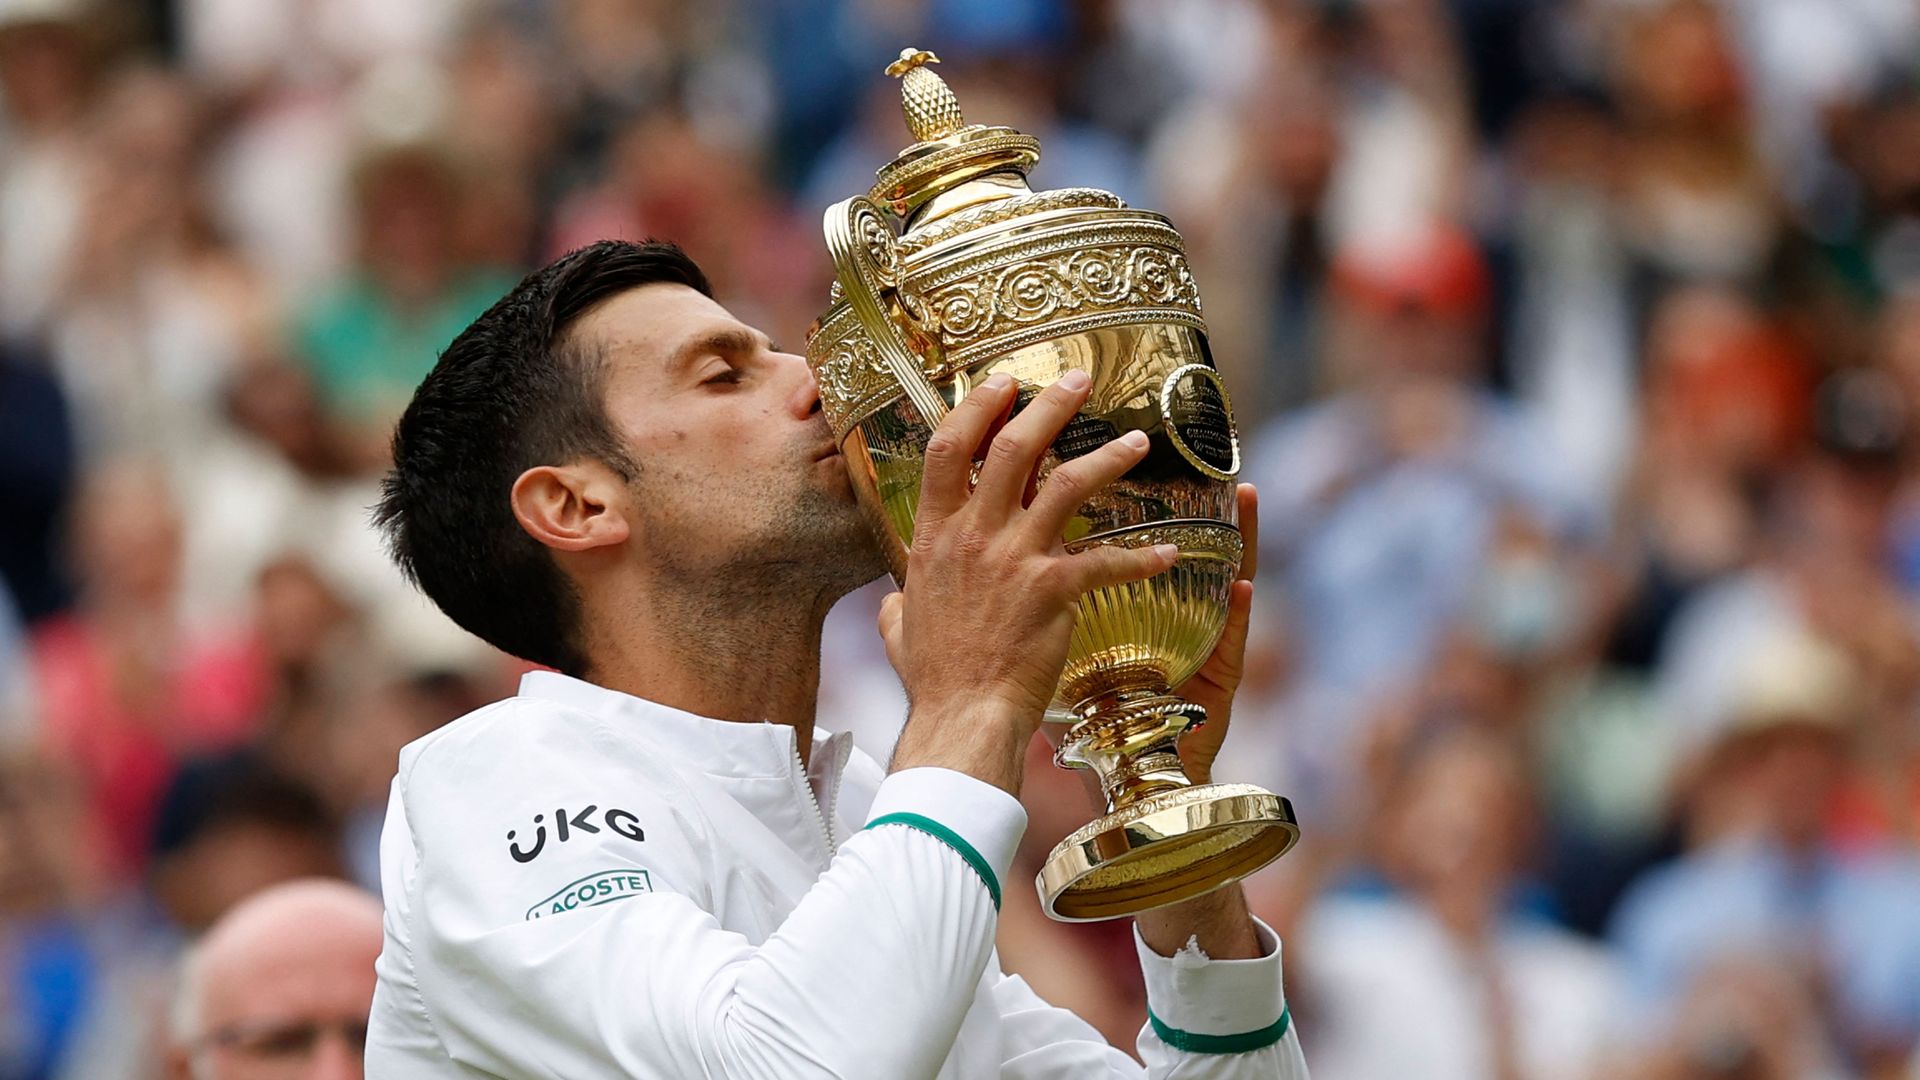 Djokovic kissing the winner's trophy at last year's Wimbledon Championships